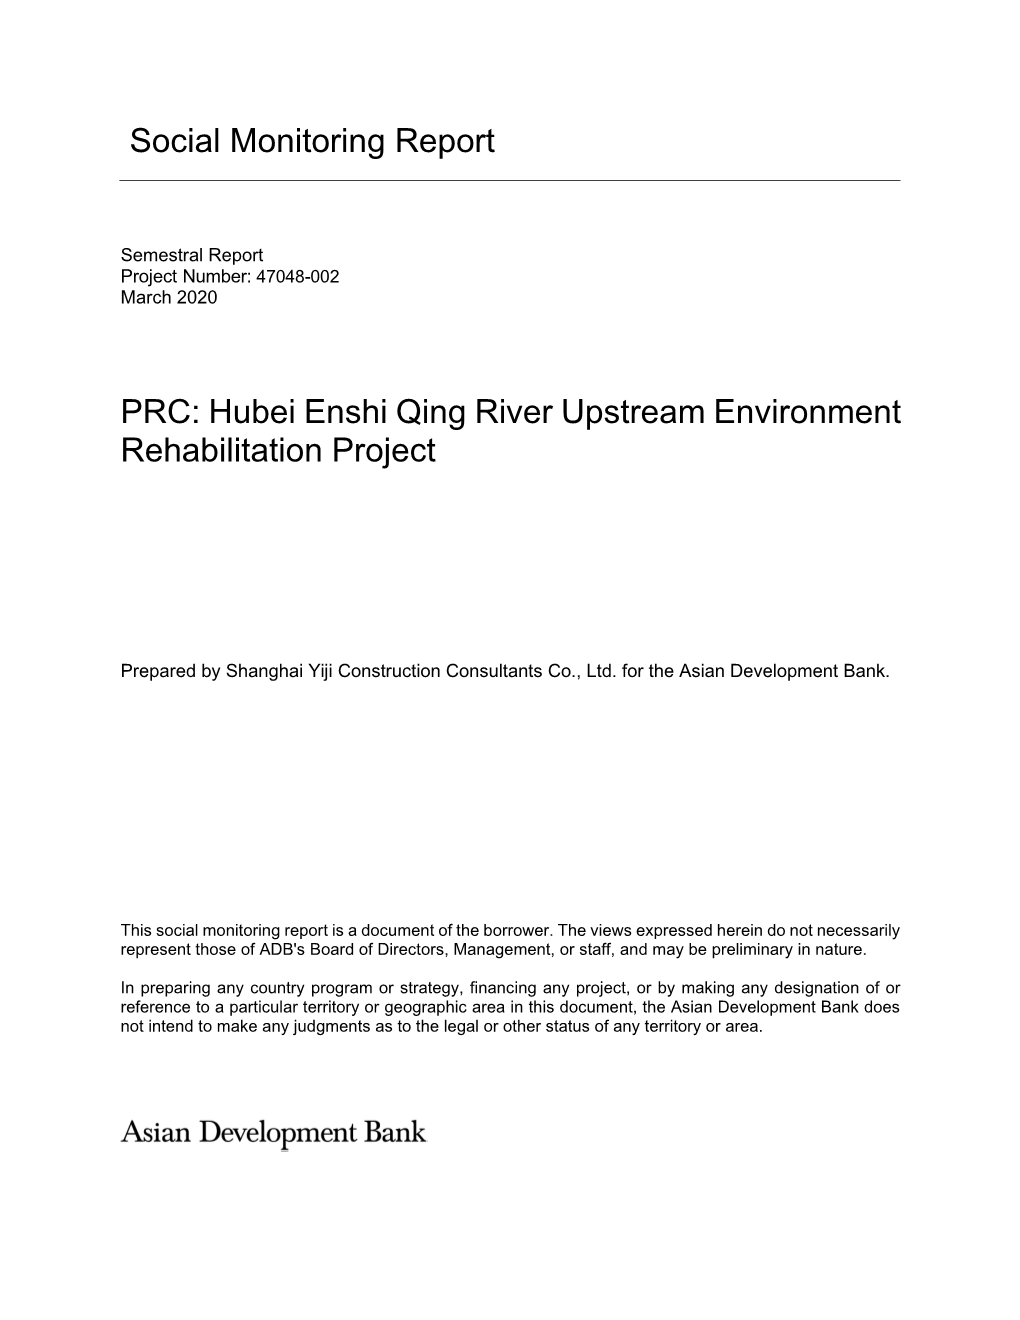 47048-002: Hubei Enshi Qing River Upstream Environment